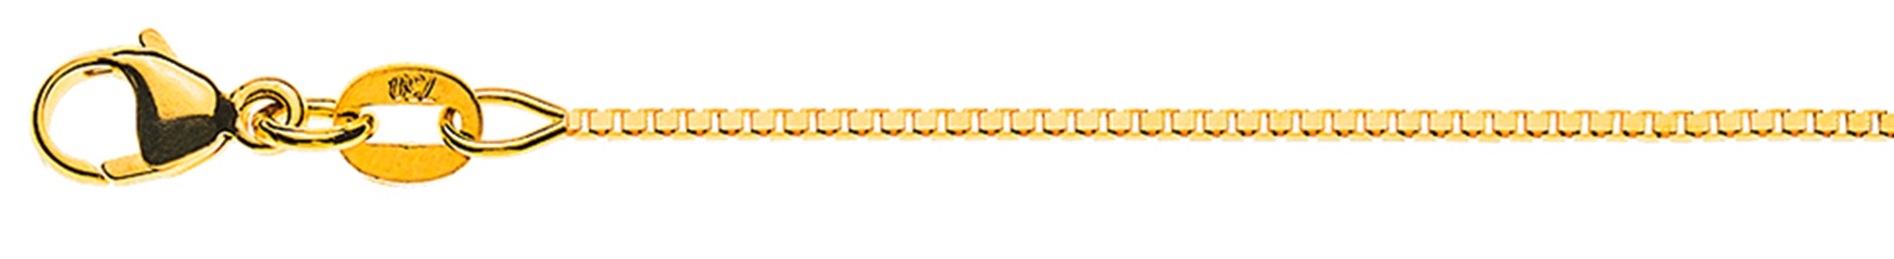 AURONOS Élégance Halskette Gelbgold 14K Venezianerkette diamantiert 60cm 0.9mm